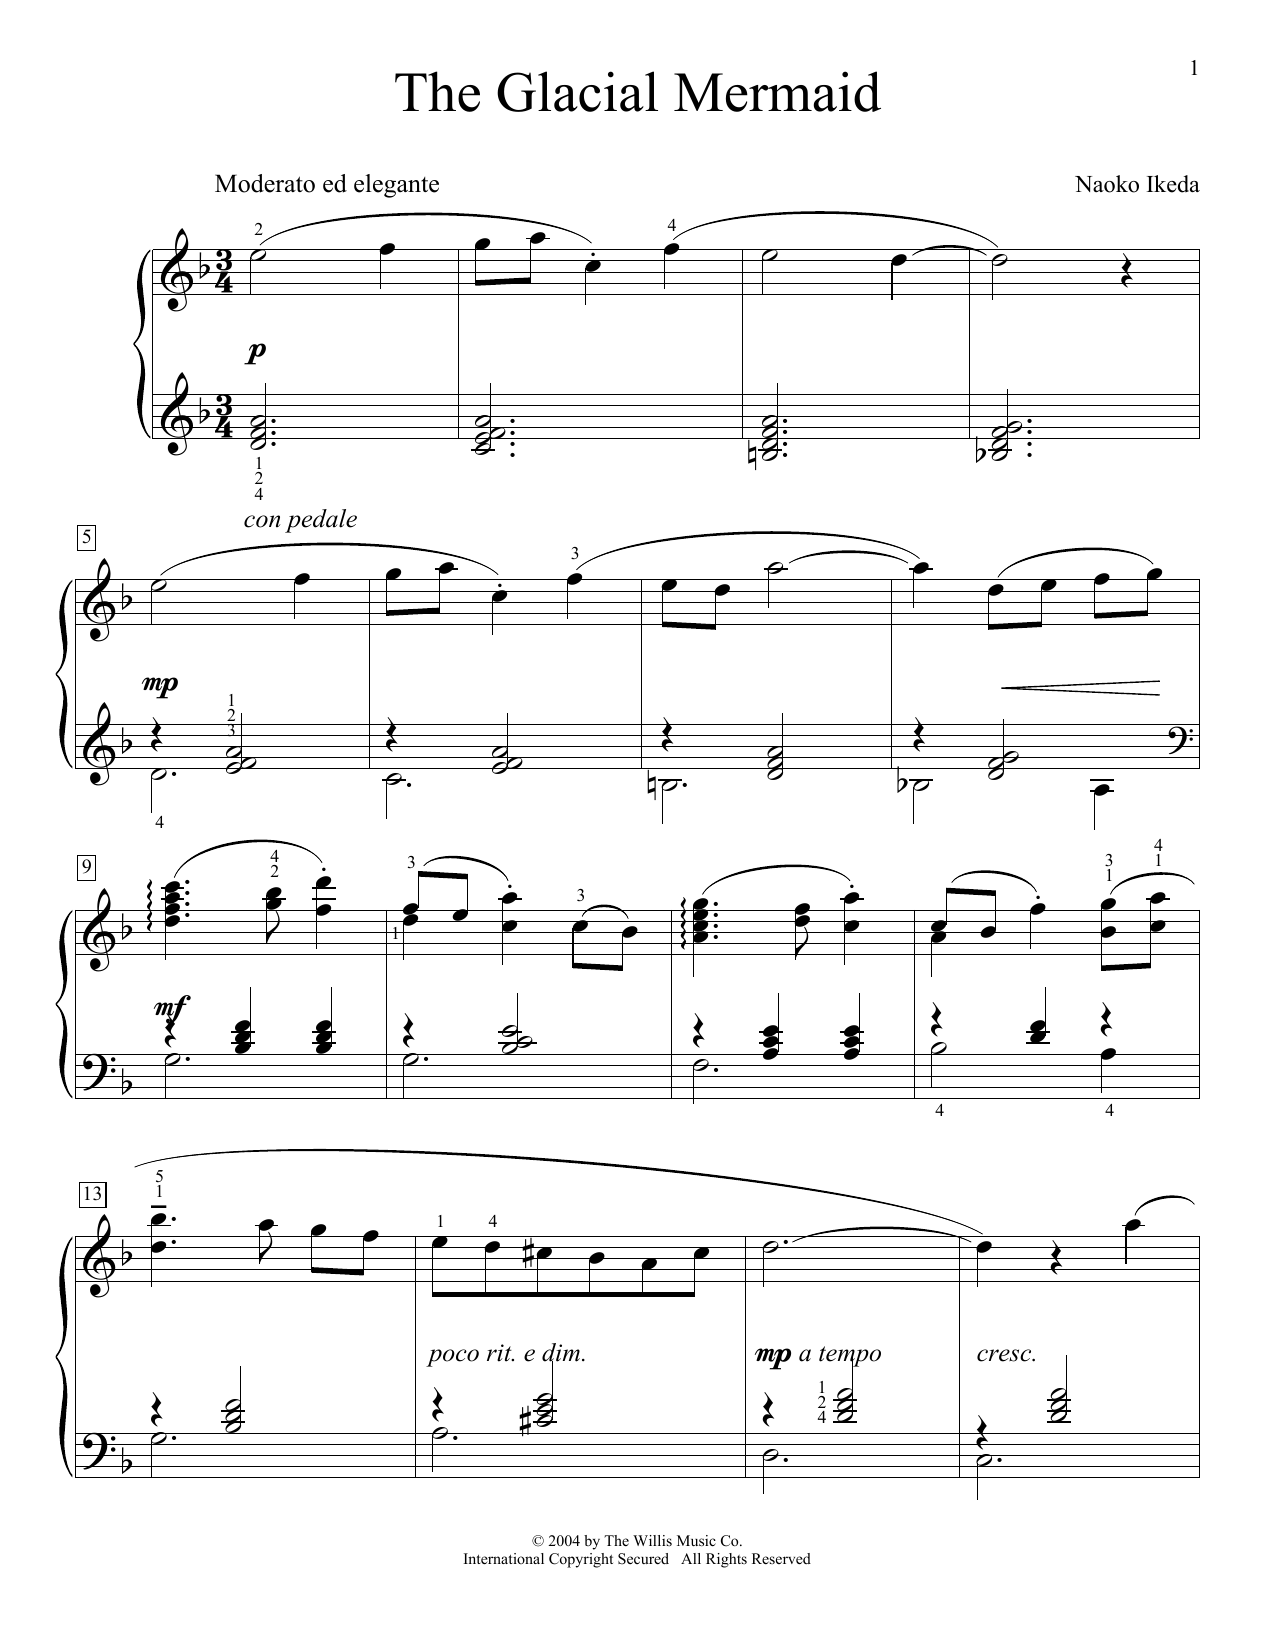 Naoko Ikeda The Glacial Mermaid Sheet Music Notes & Chords for Piano Duet - Download or Print PDF